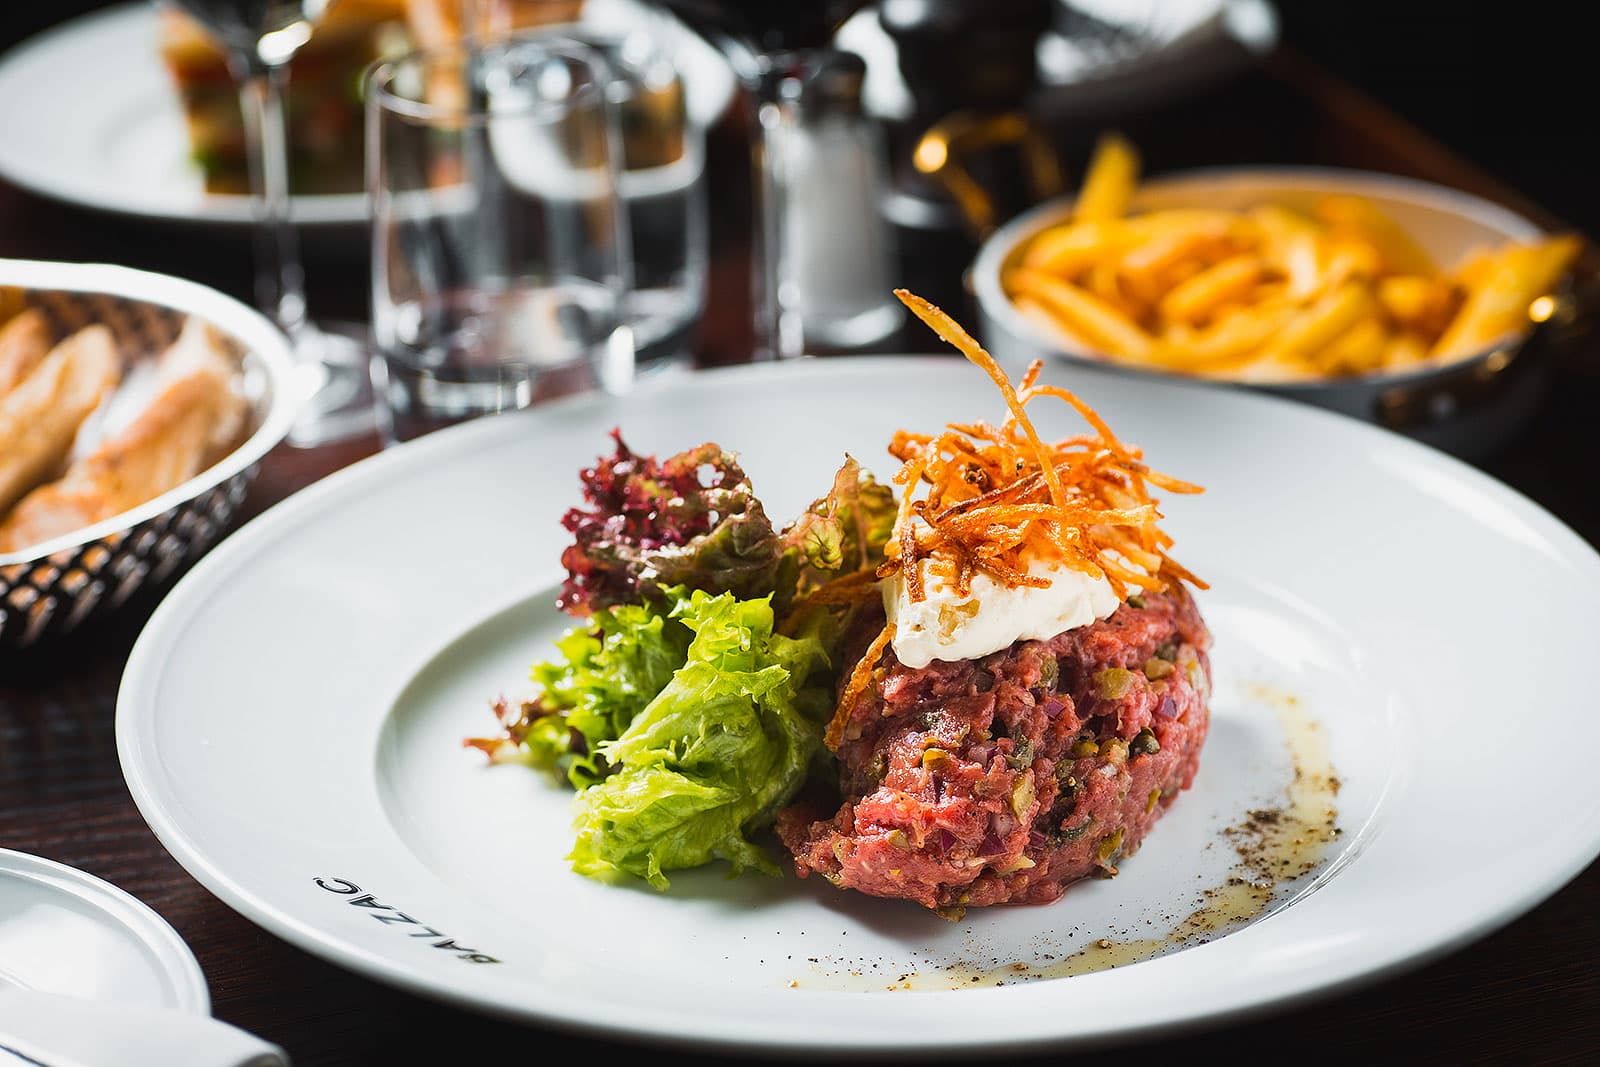 Brasserie Balzac – The hottest restaurants right now